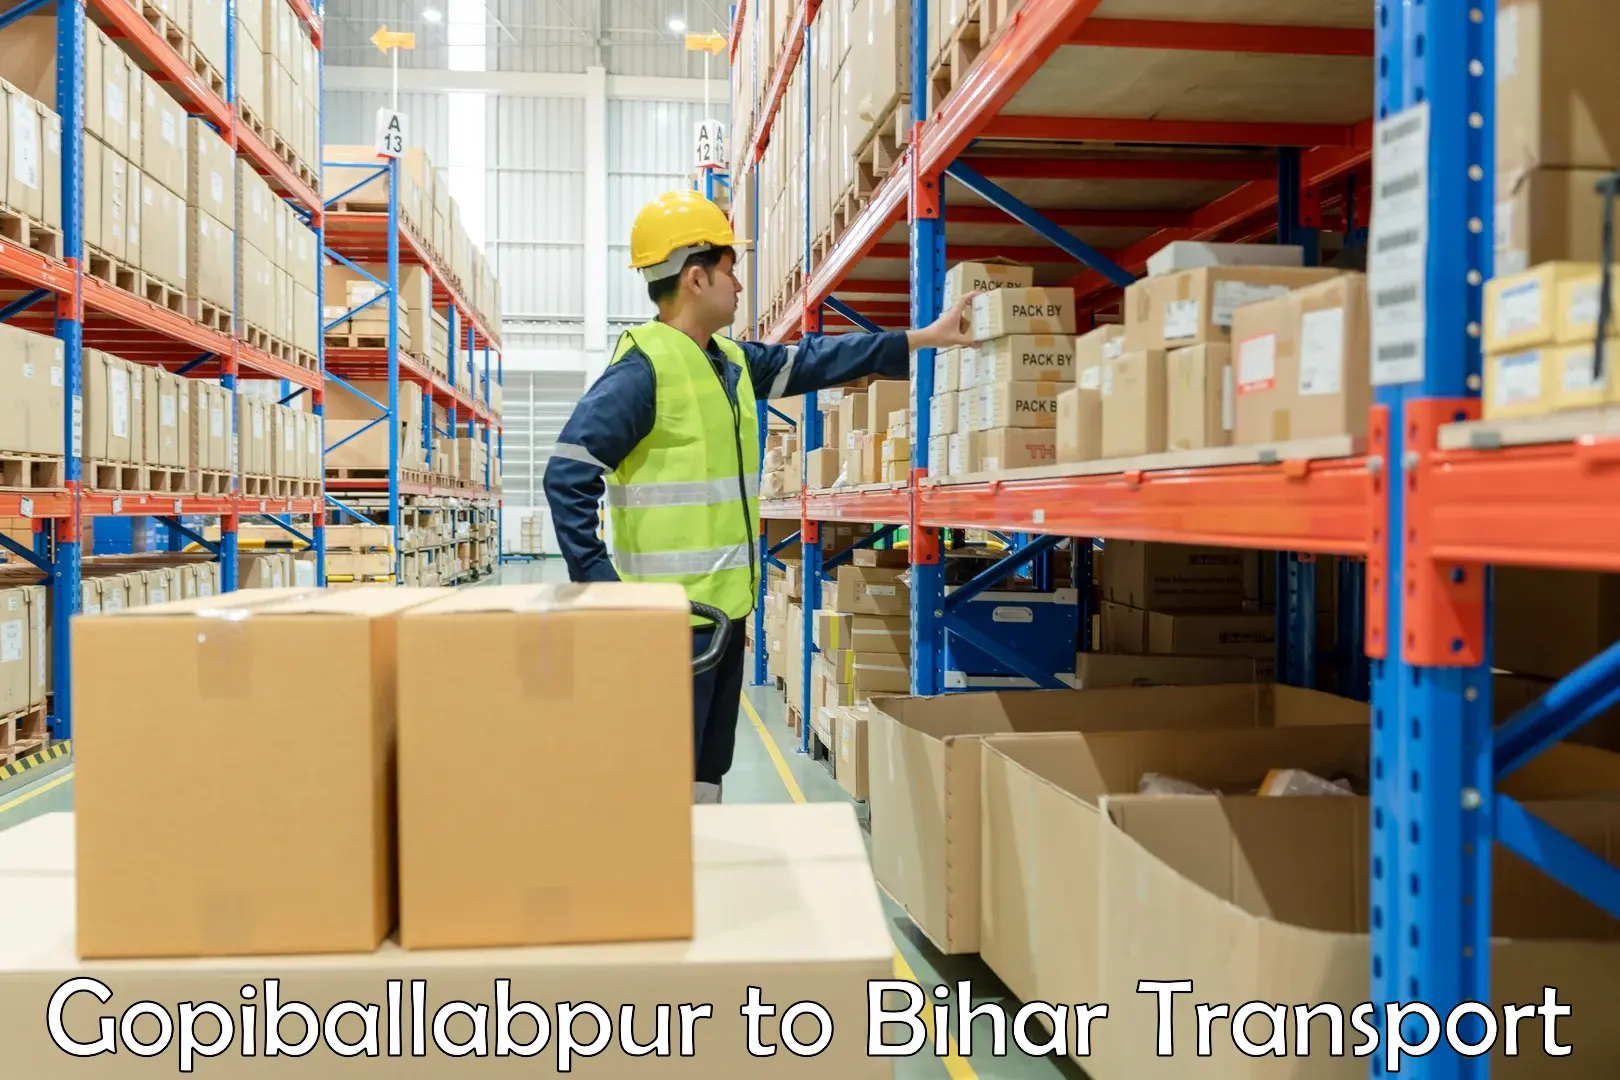 Daily parcel service transport Gopiballabpur to Dhaka